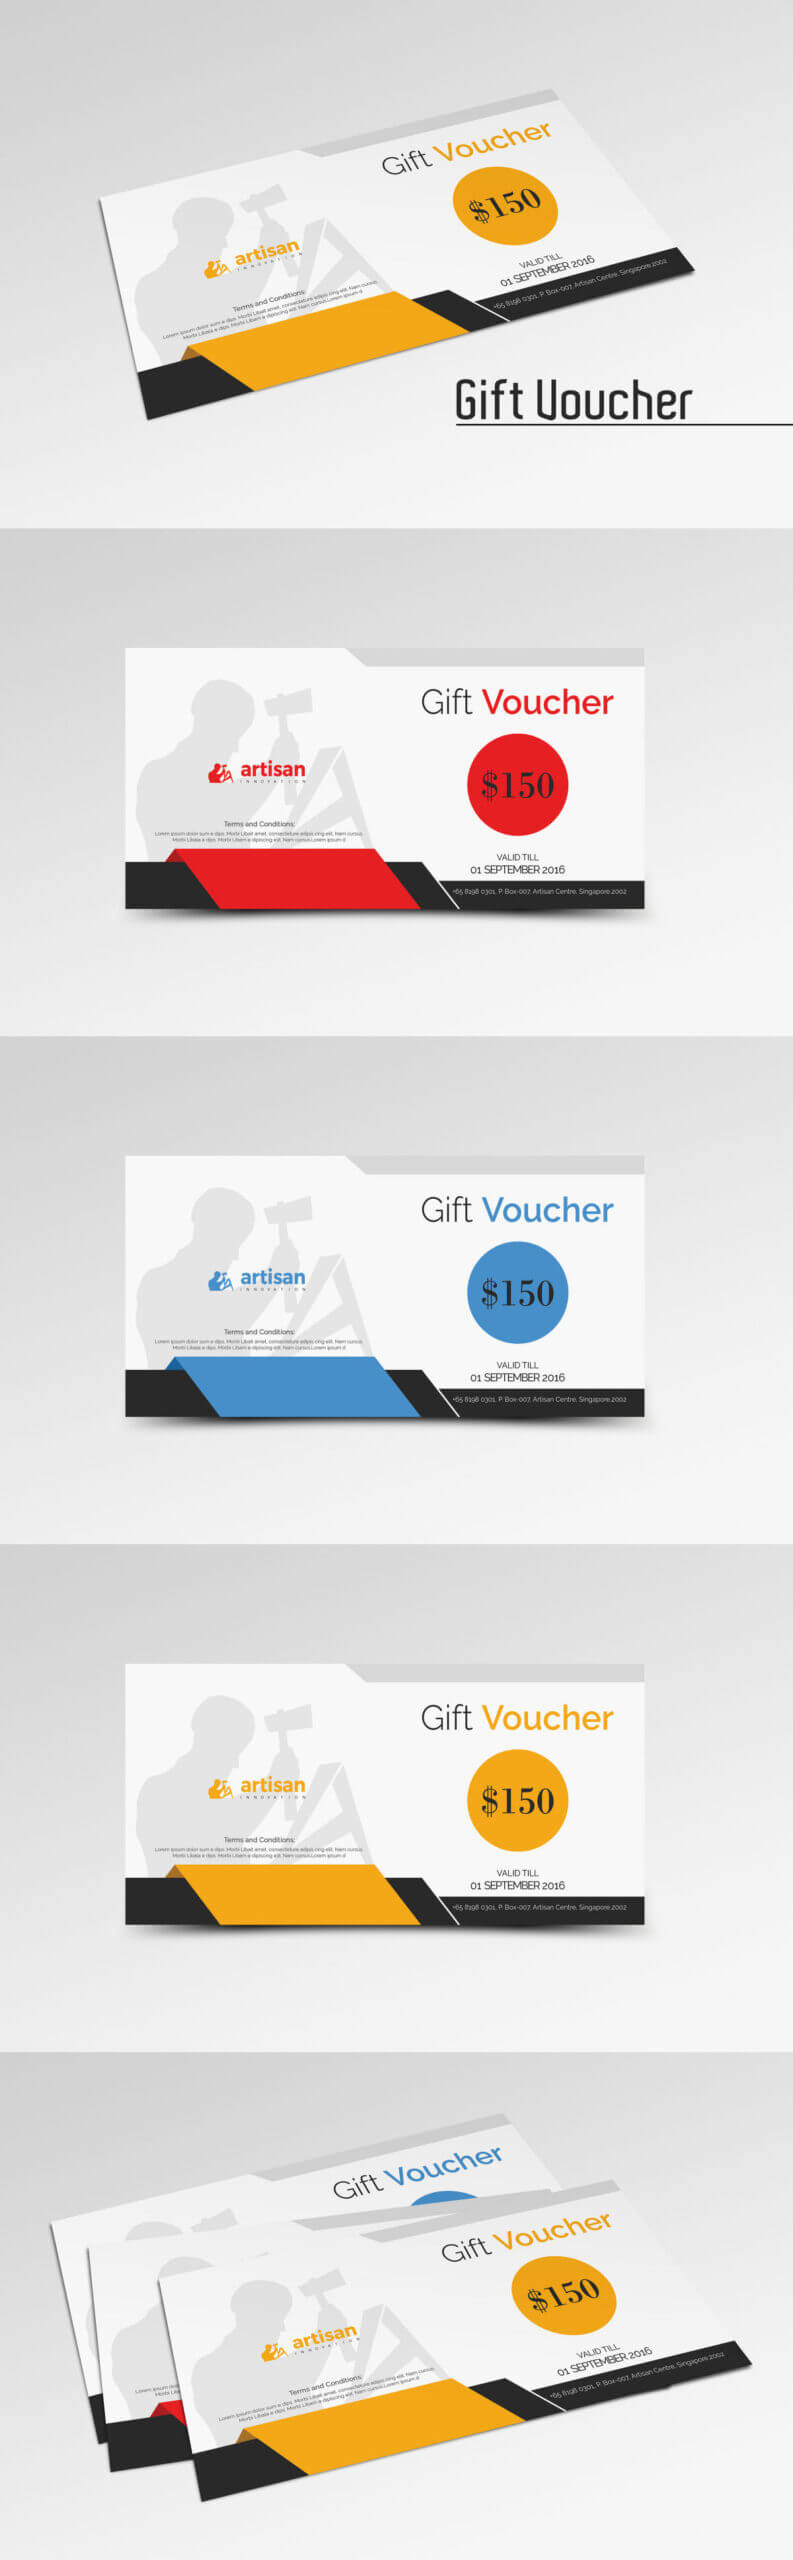 Gift Voucher Template Ai, Eps, Psd | Gift Card Template With Gift Card Template Illustrator